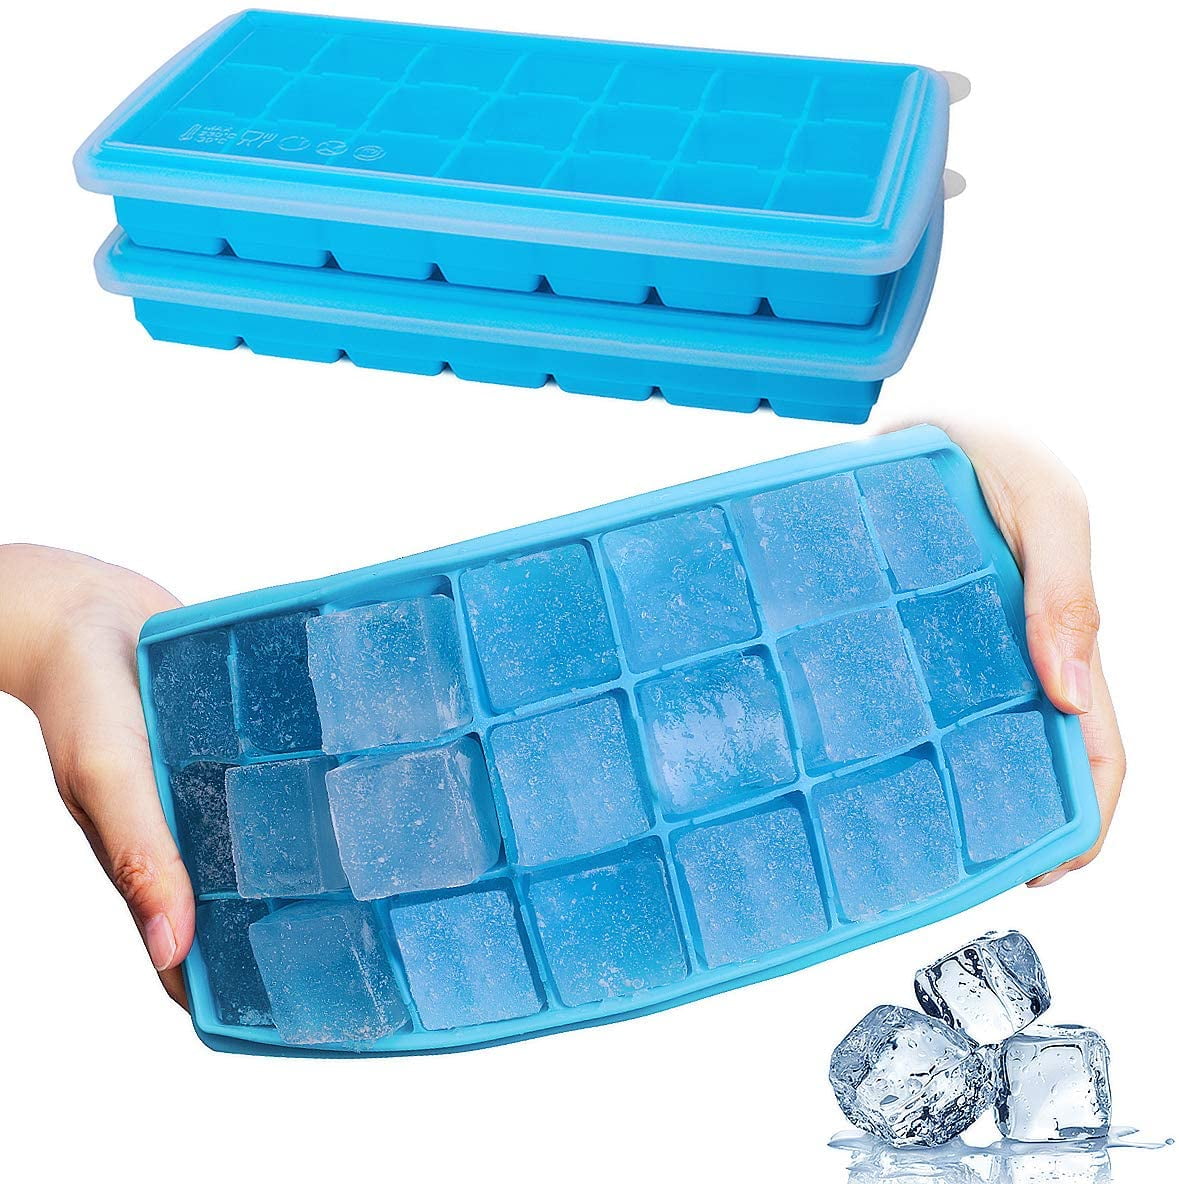 Freshware Silicone Ice Cube Trays, 2-Inch, Blue, 8-Cavity - M